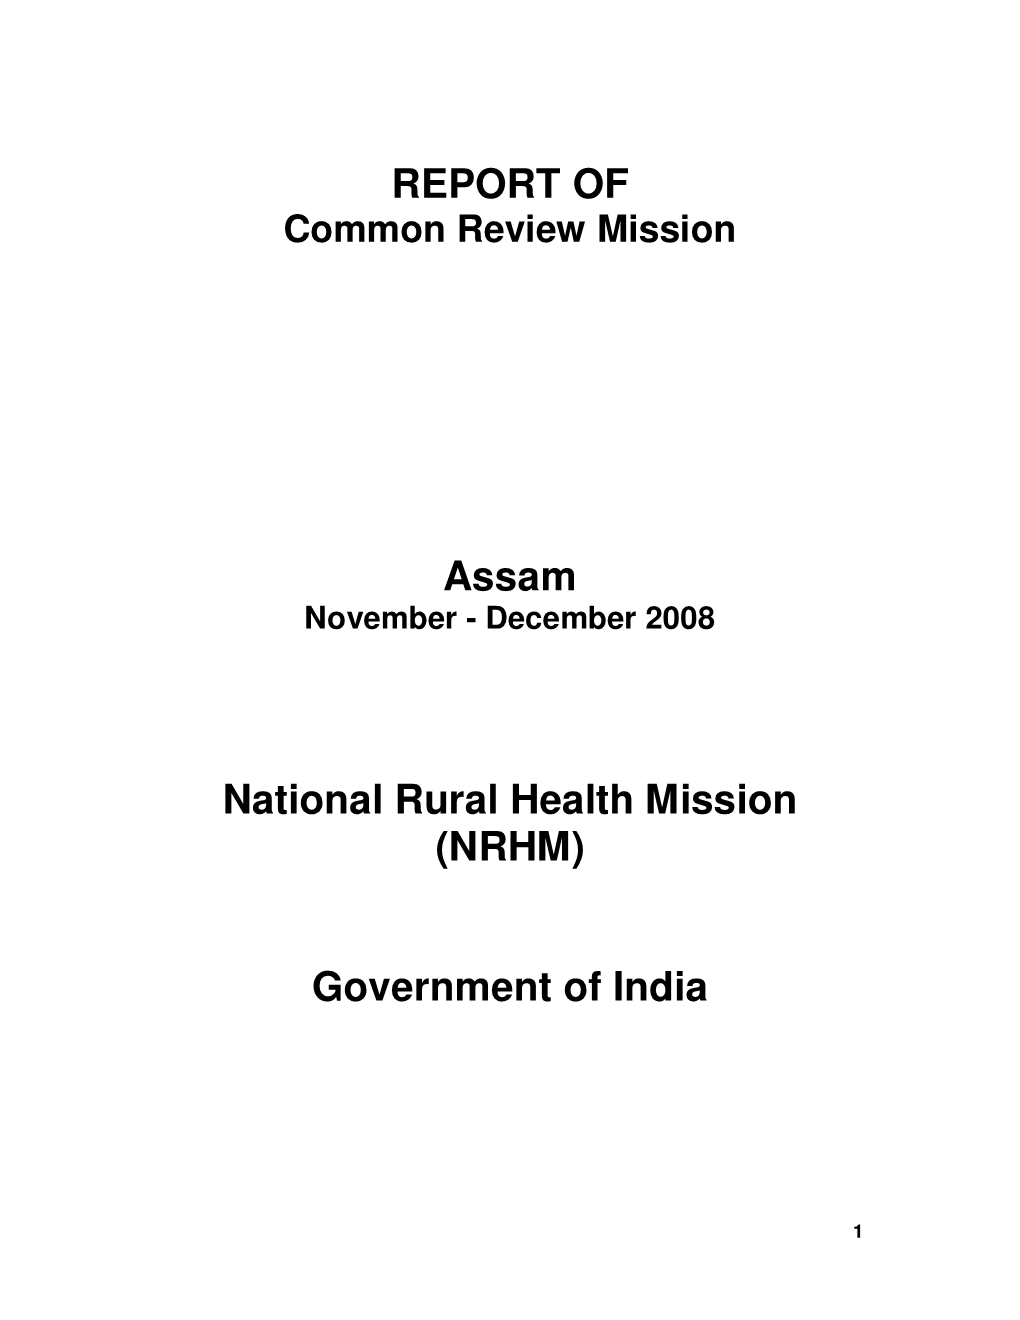 REPORT of Assam National Rural Health Mission (NRHM